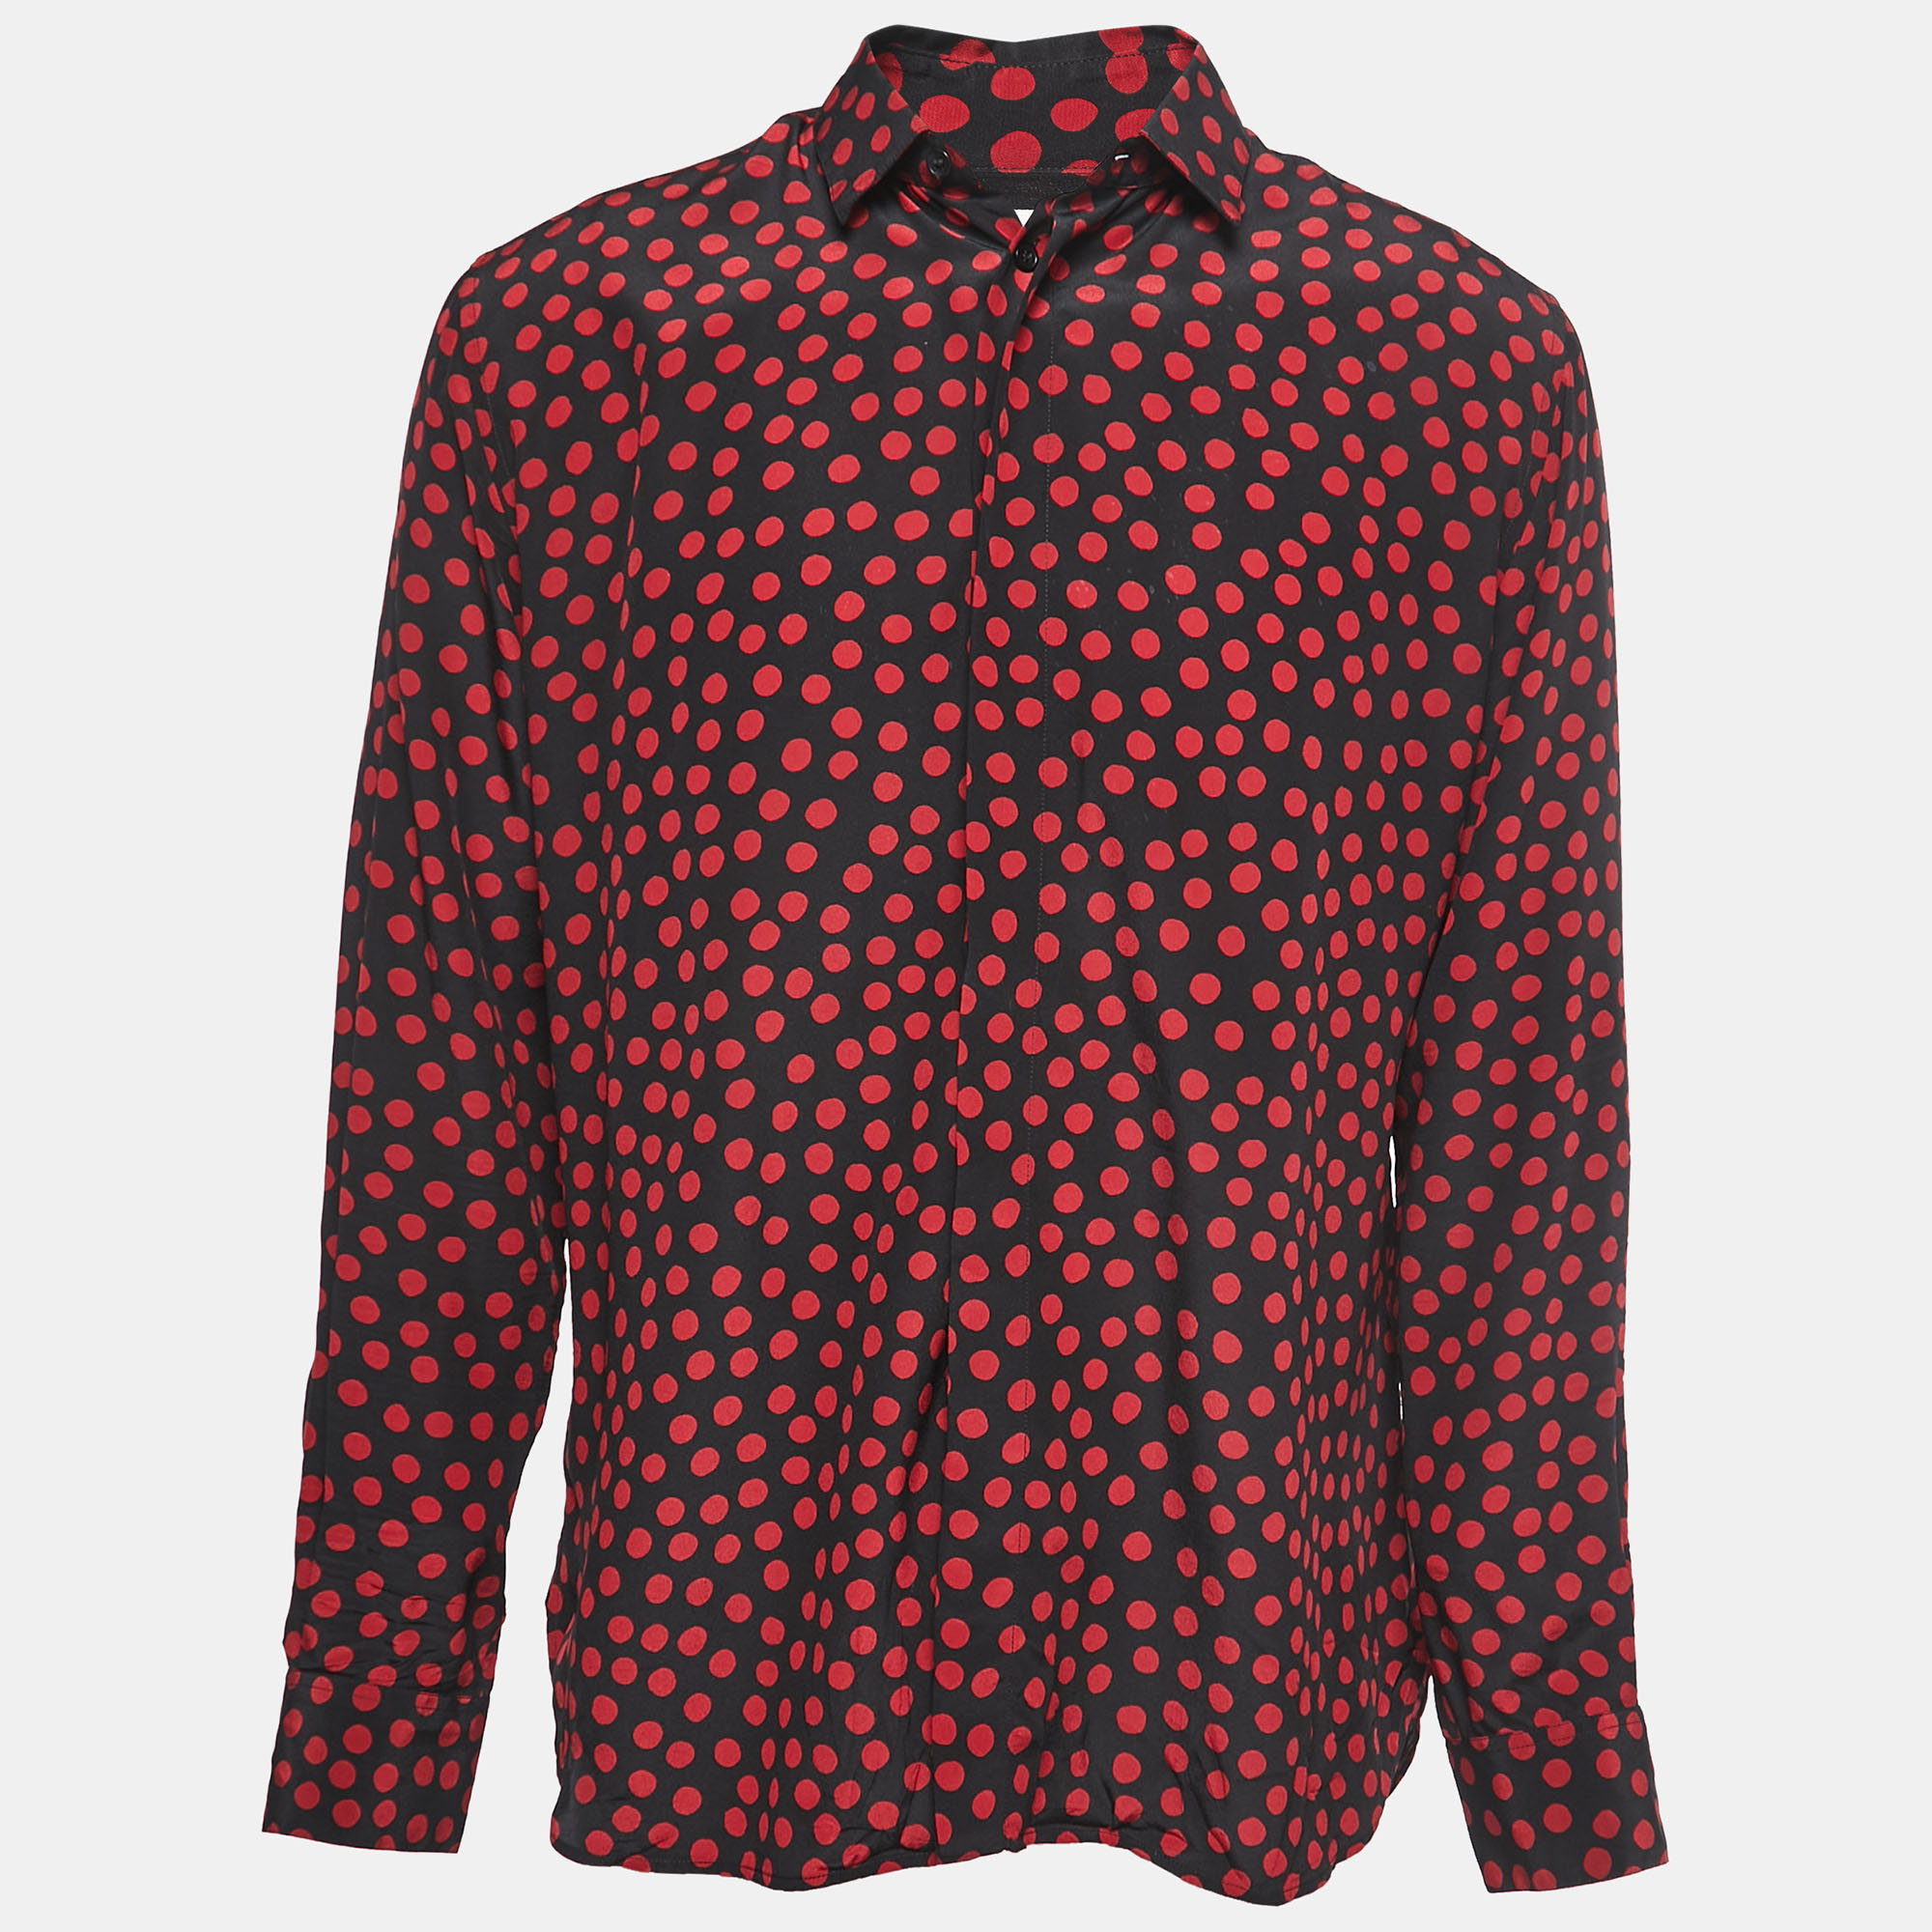 saint laurent paris black/red polka dot print silk button front full sleeve shirt m